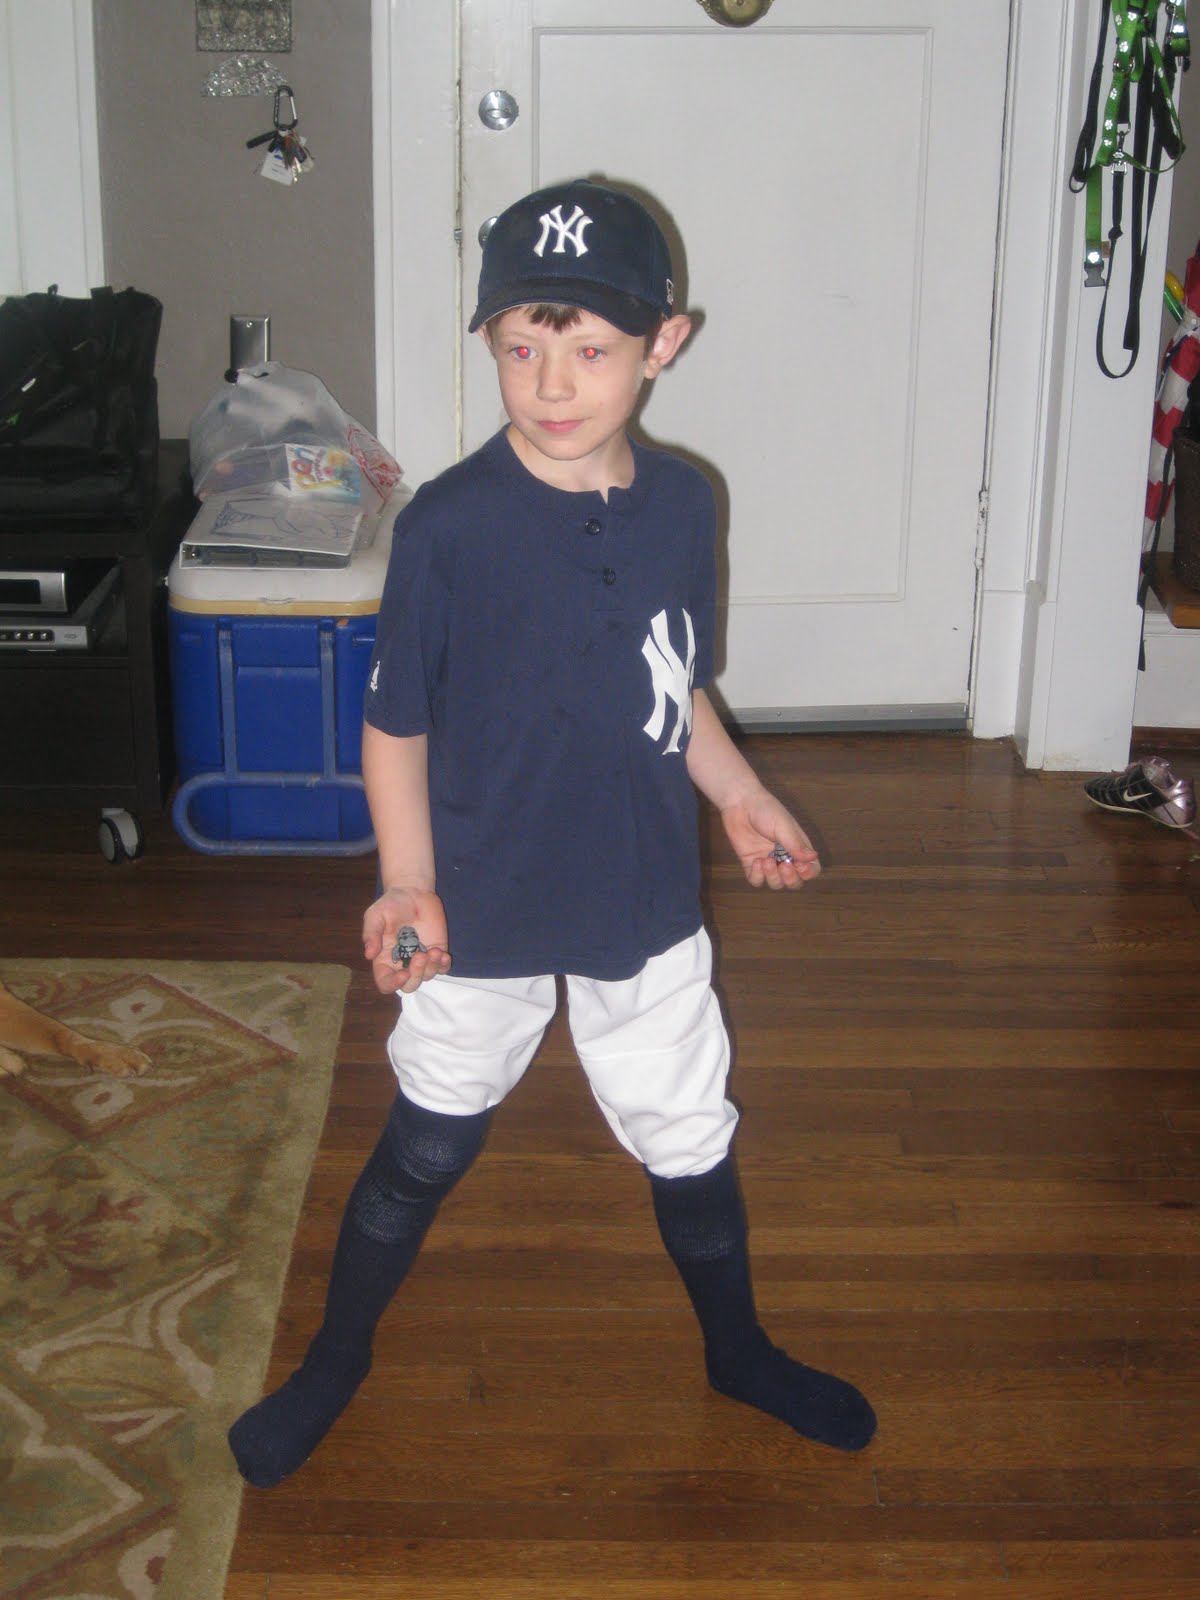 The Hatfield Family: Baseball socks or thigh highs?